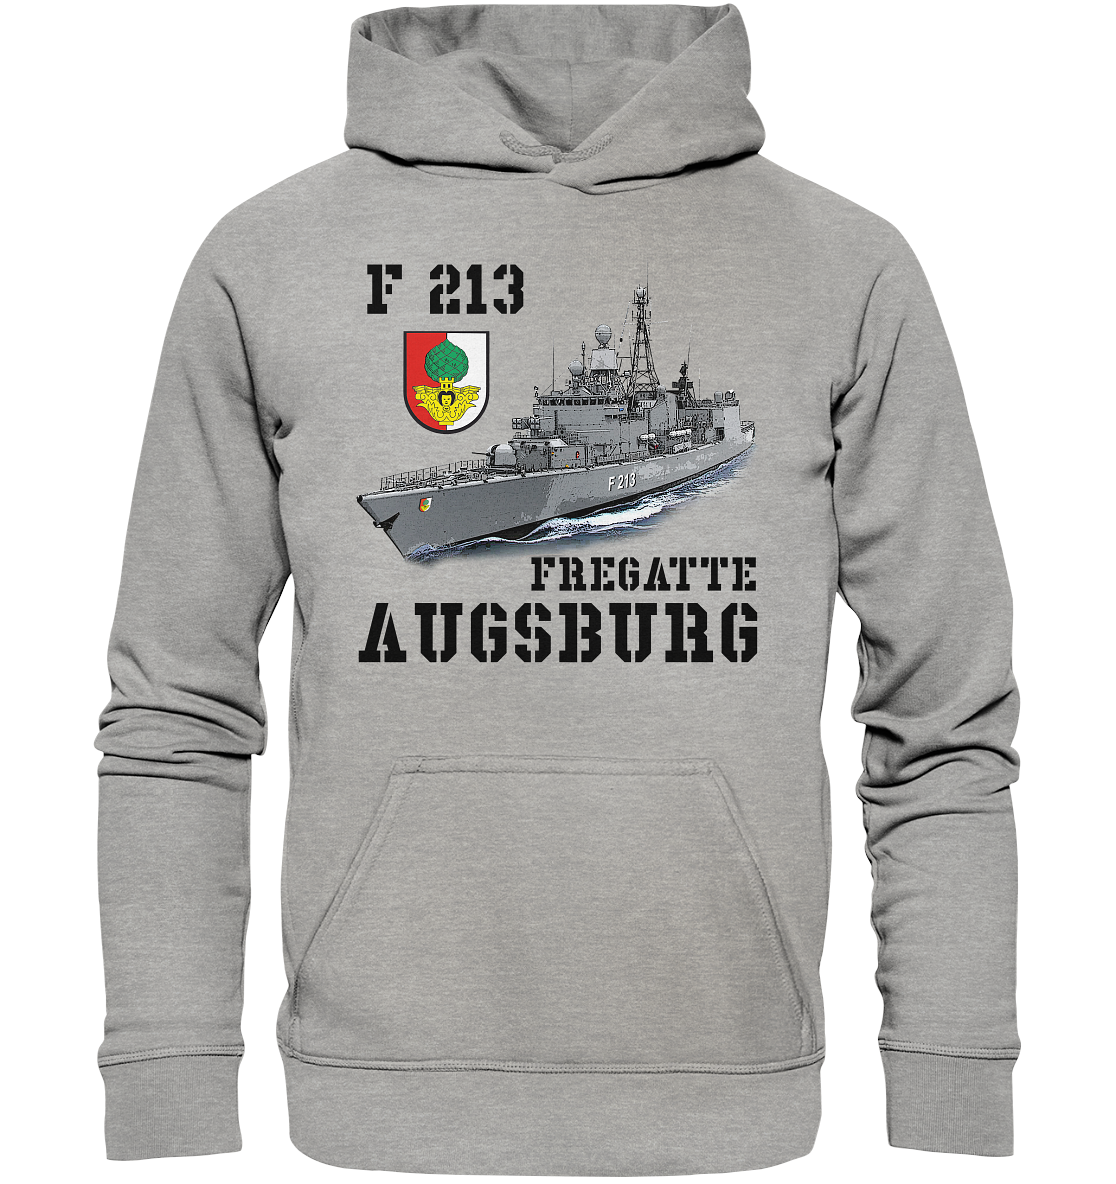 F213 Fregatte AUGSBURG - Basic Unisex Hoodie